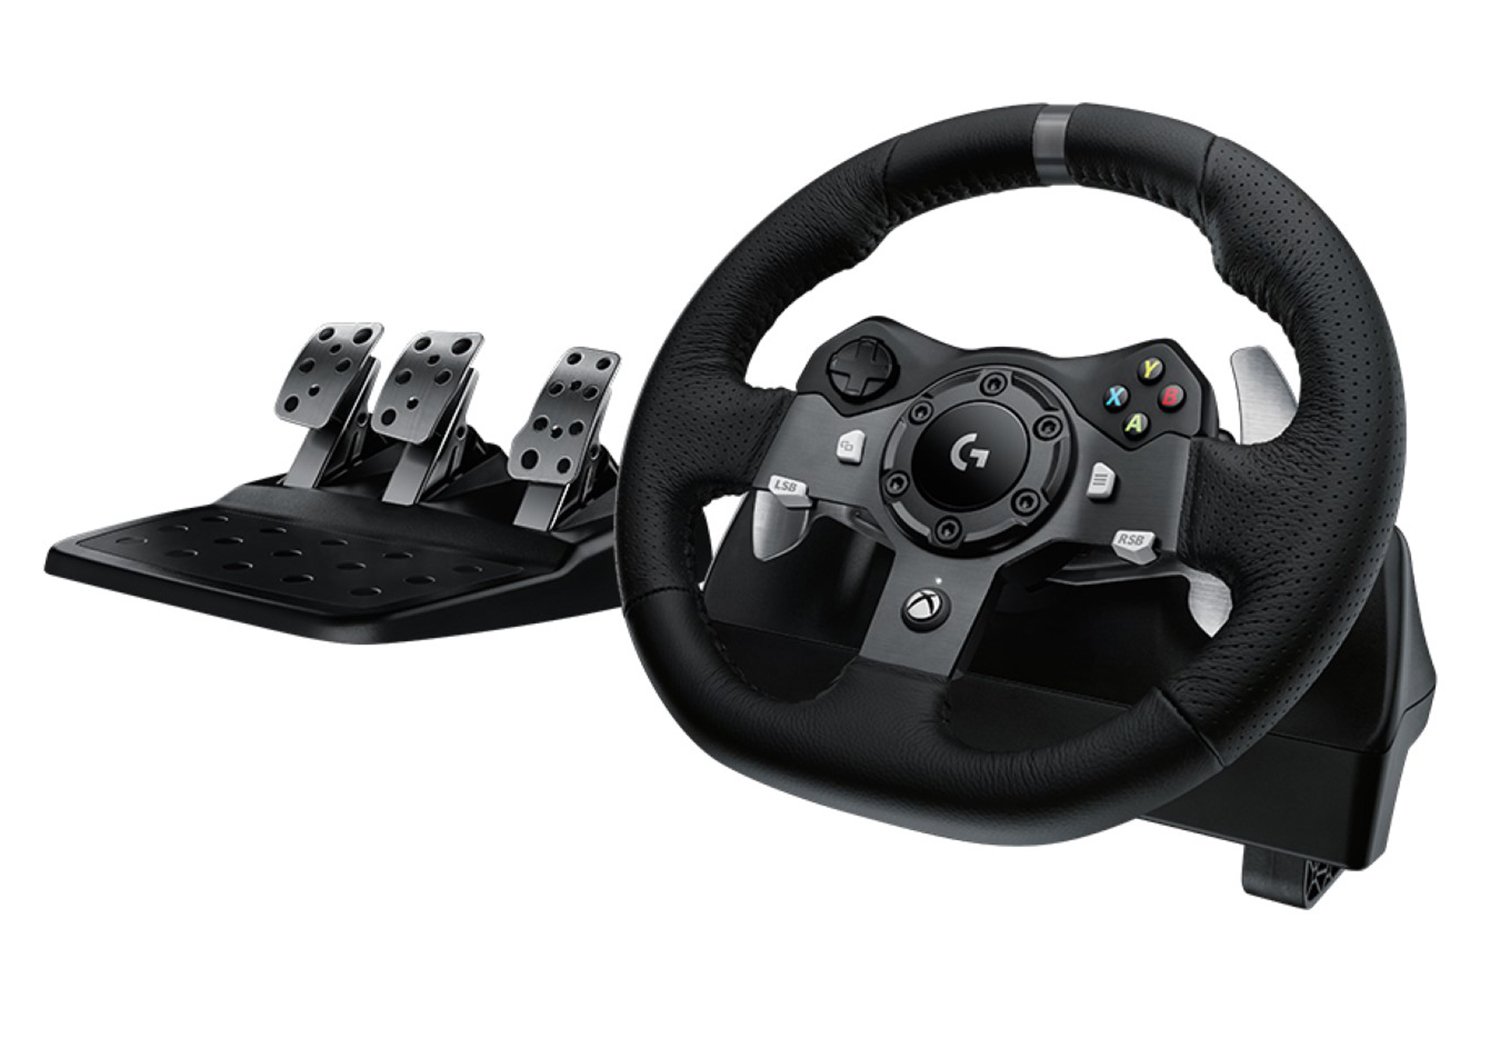 Logitech G920 Driving Force Racing Wheel review